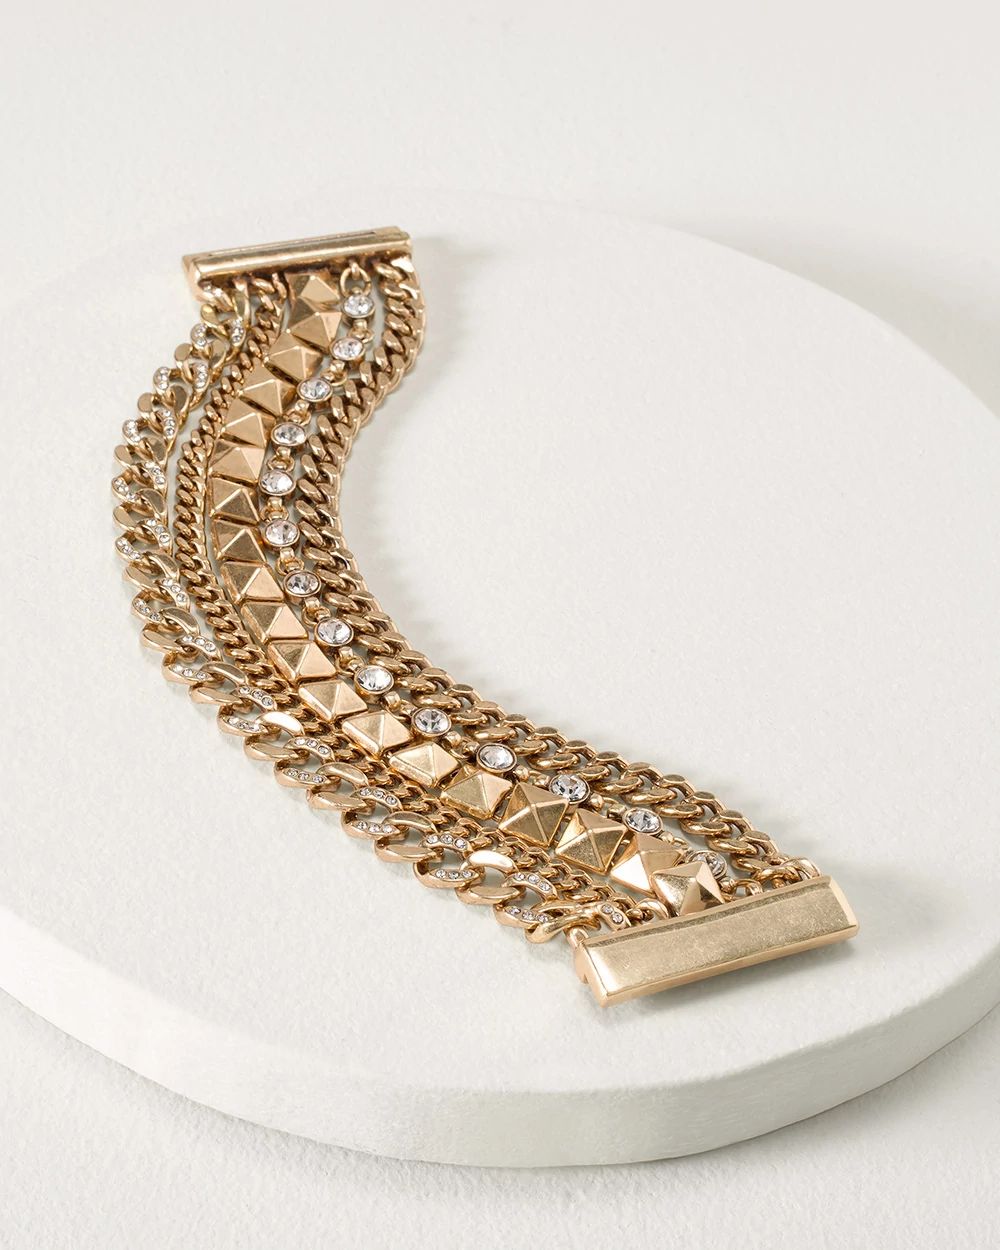 Studded Goldtone Multi-Strand Bracelet click to view larger image.